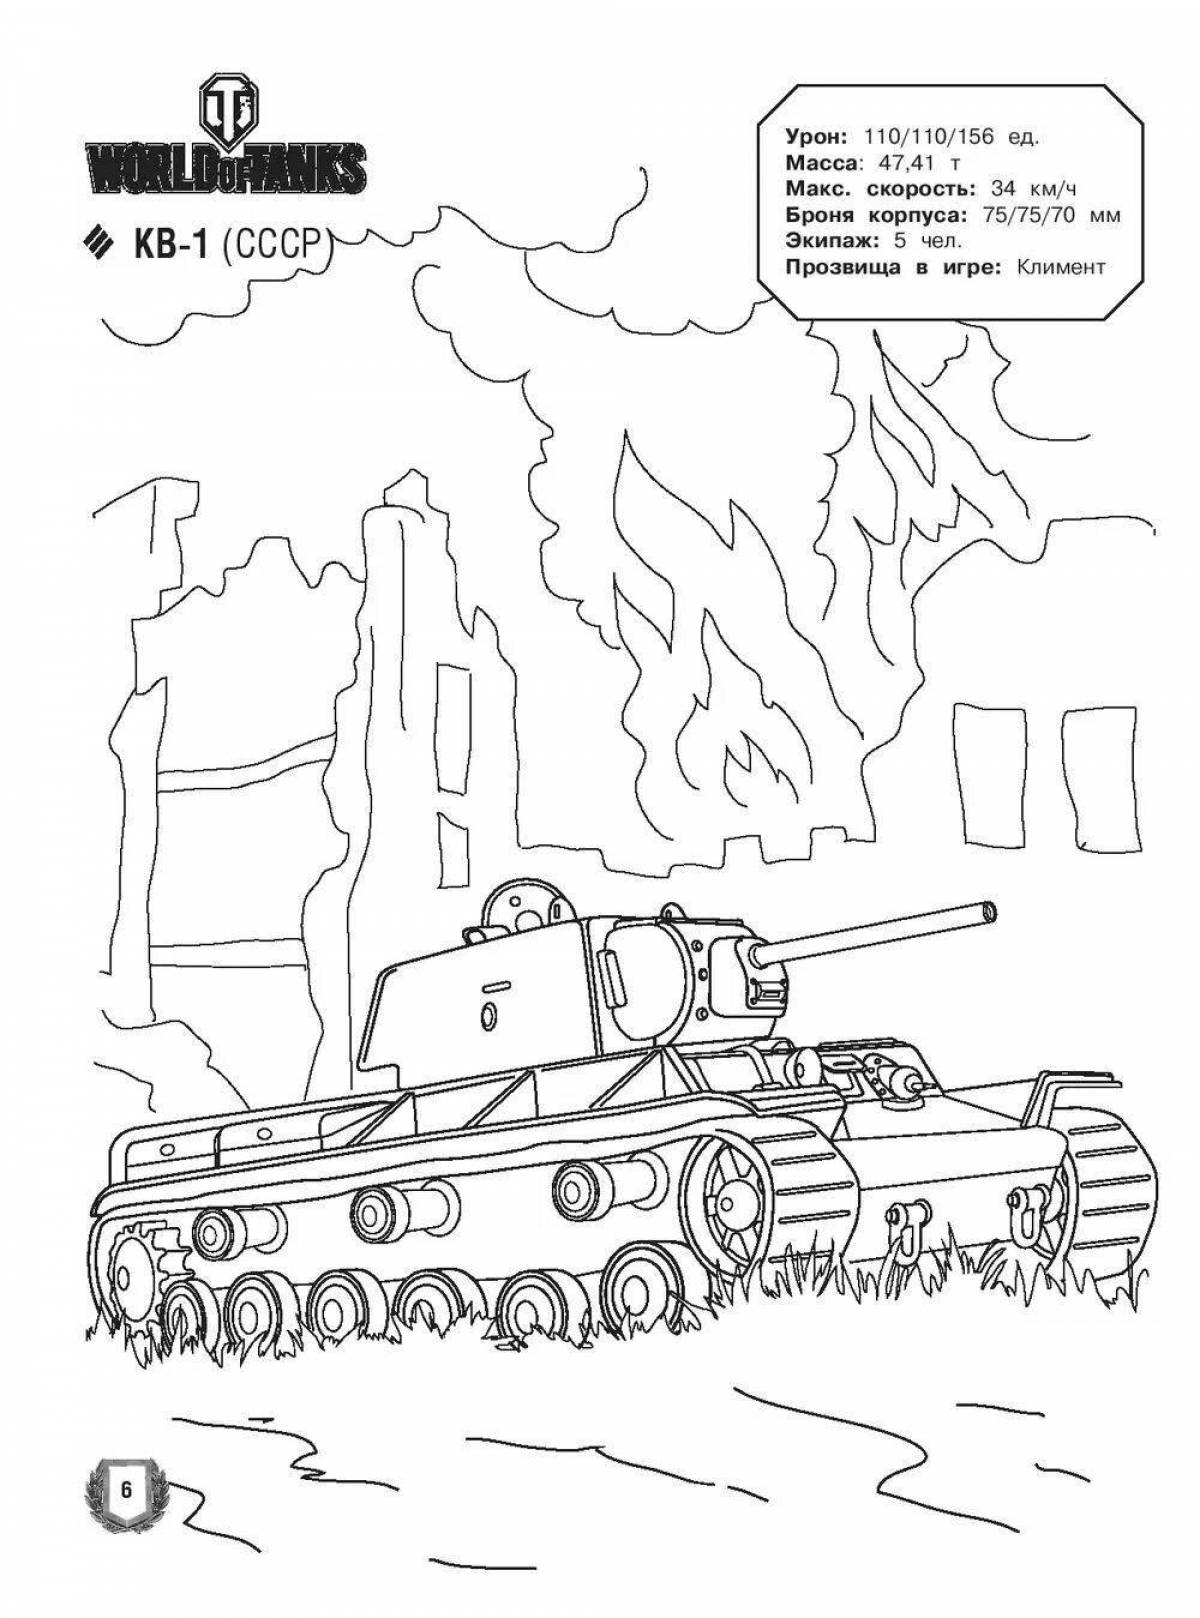 Творческая раскраска world of tanks